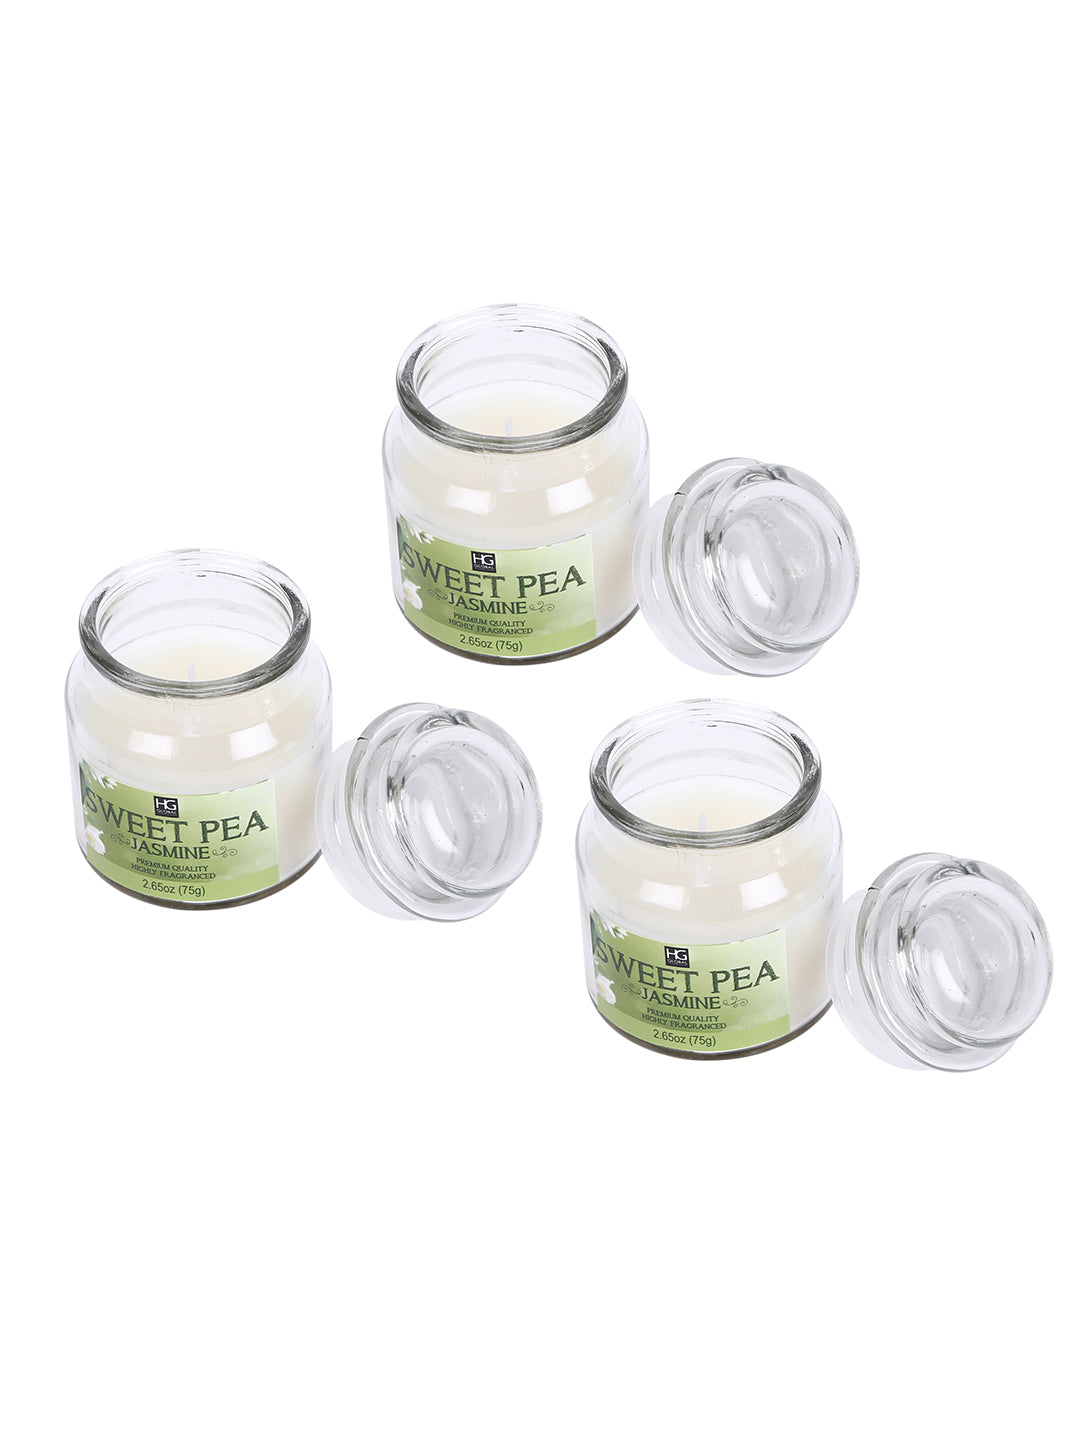 Set of 3 Hosley®  Sweet Pea Jasmine Highly Fragranced Jar Candles 2.65 Oz wax each